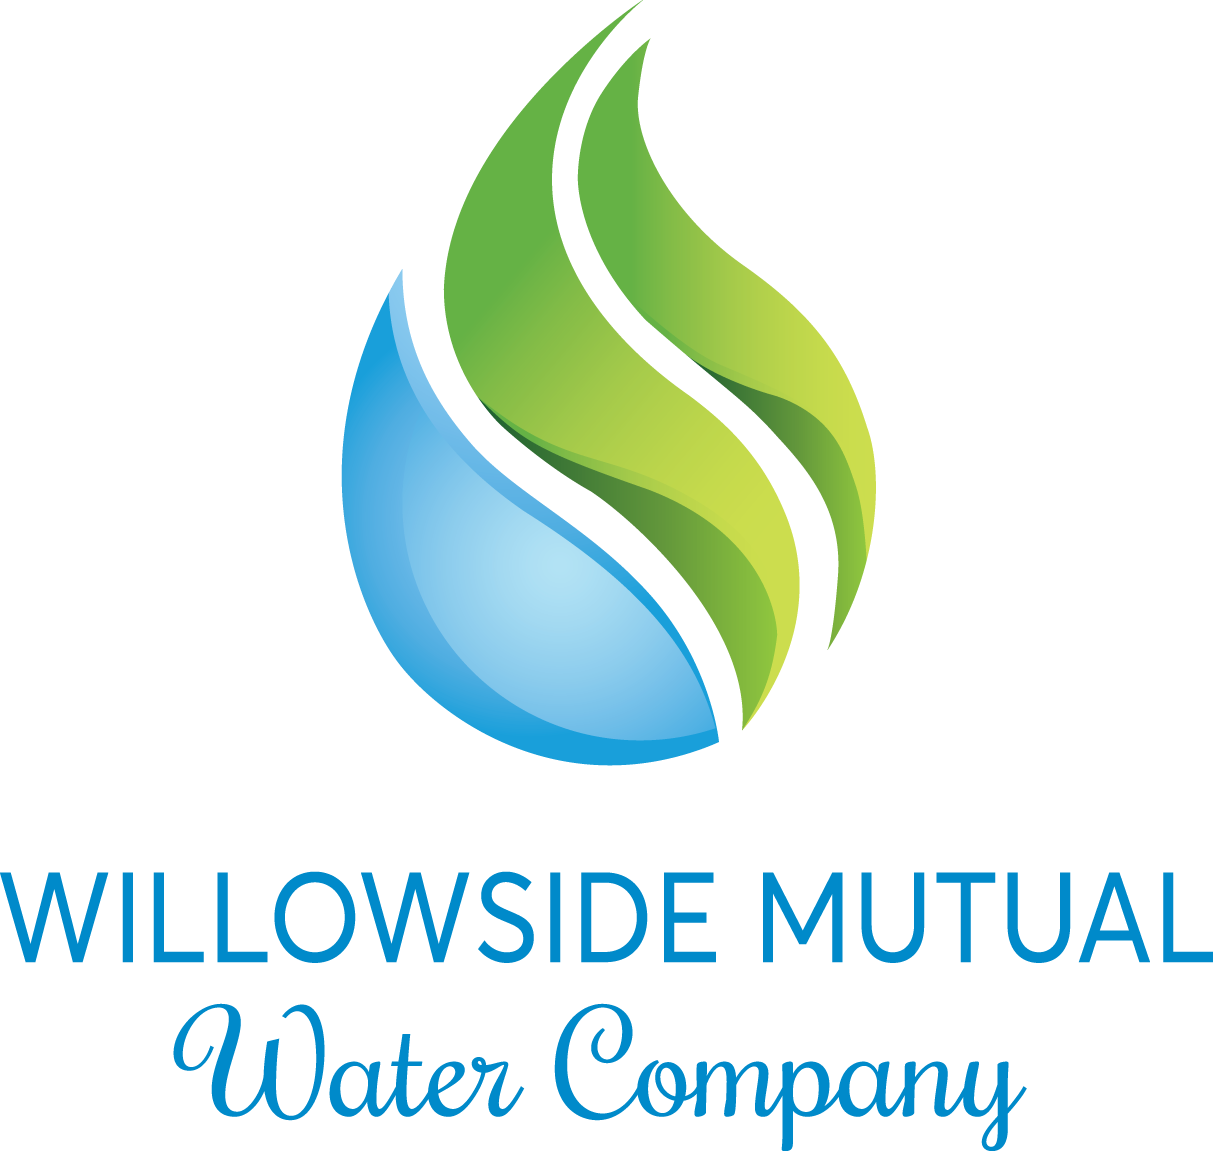 WillowSide Mutual Water Company